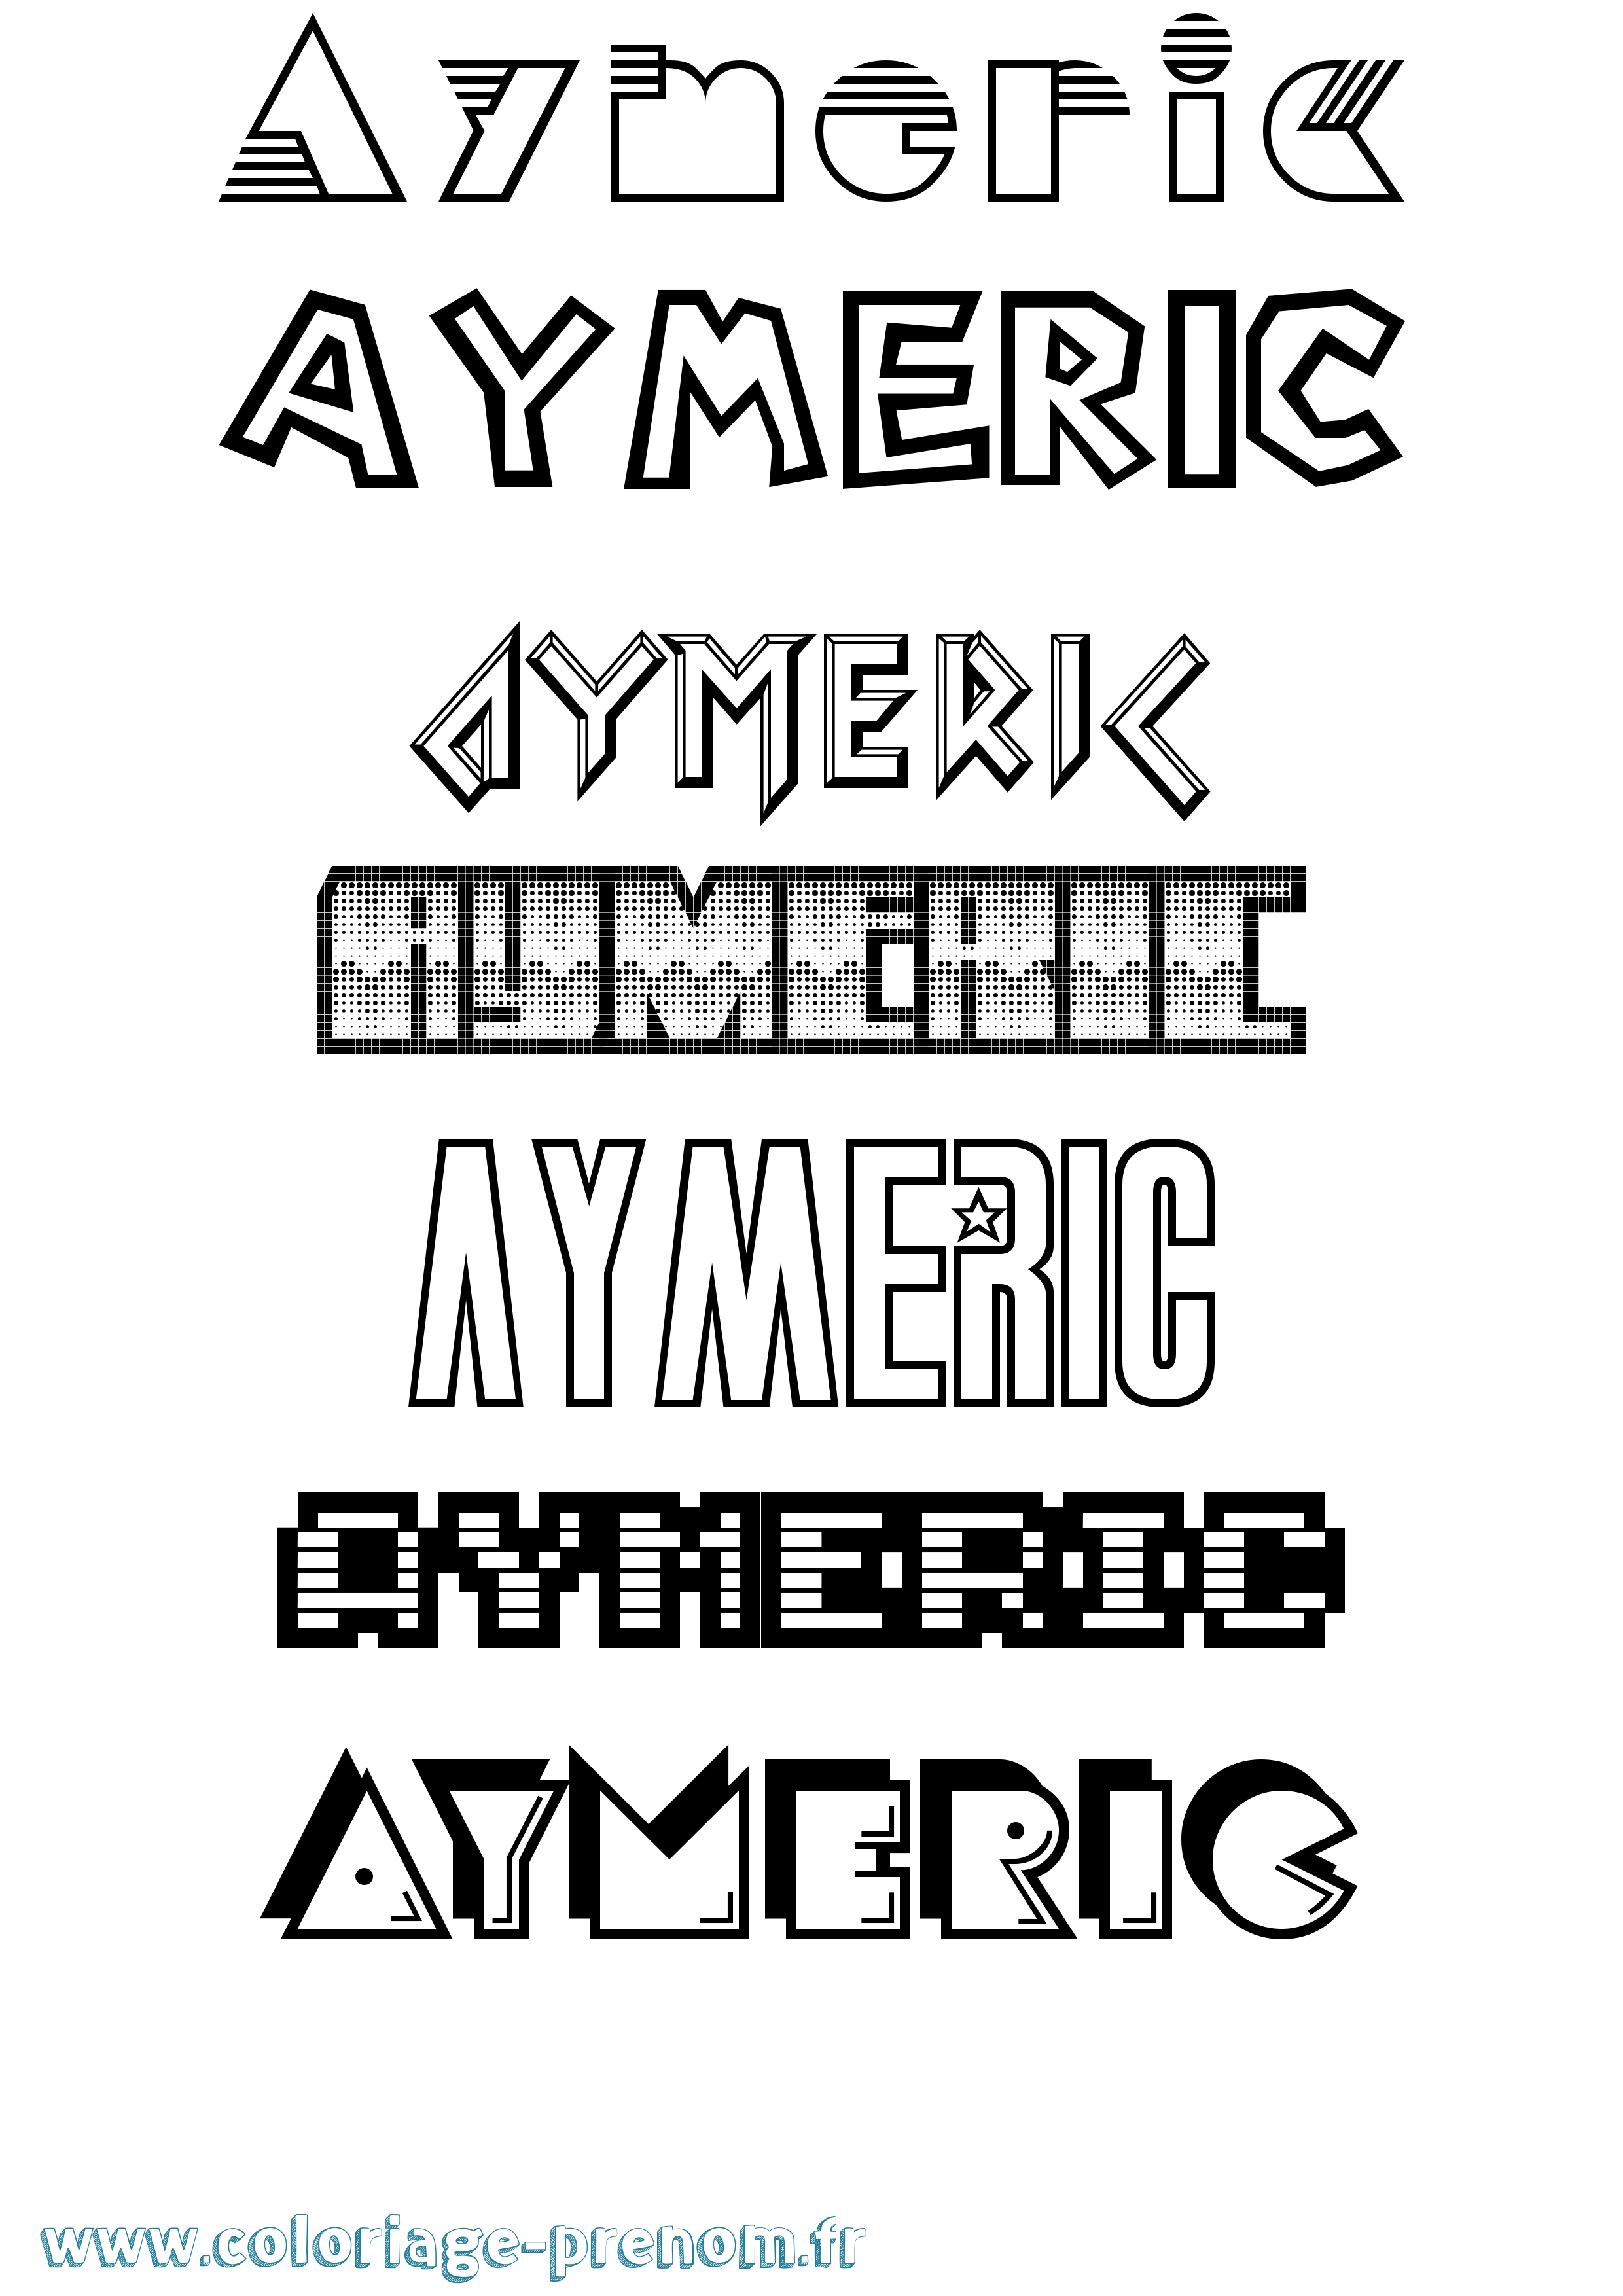 Coloriage prénom Aymeric